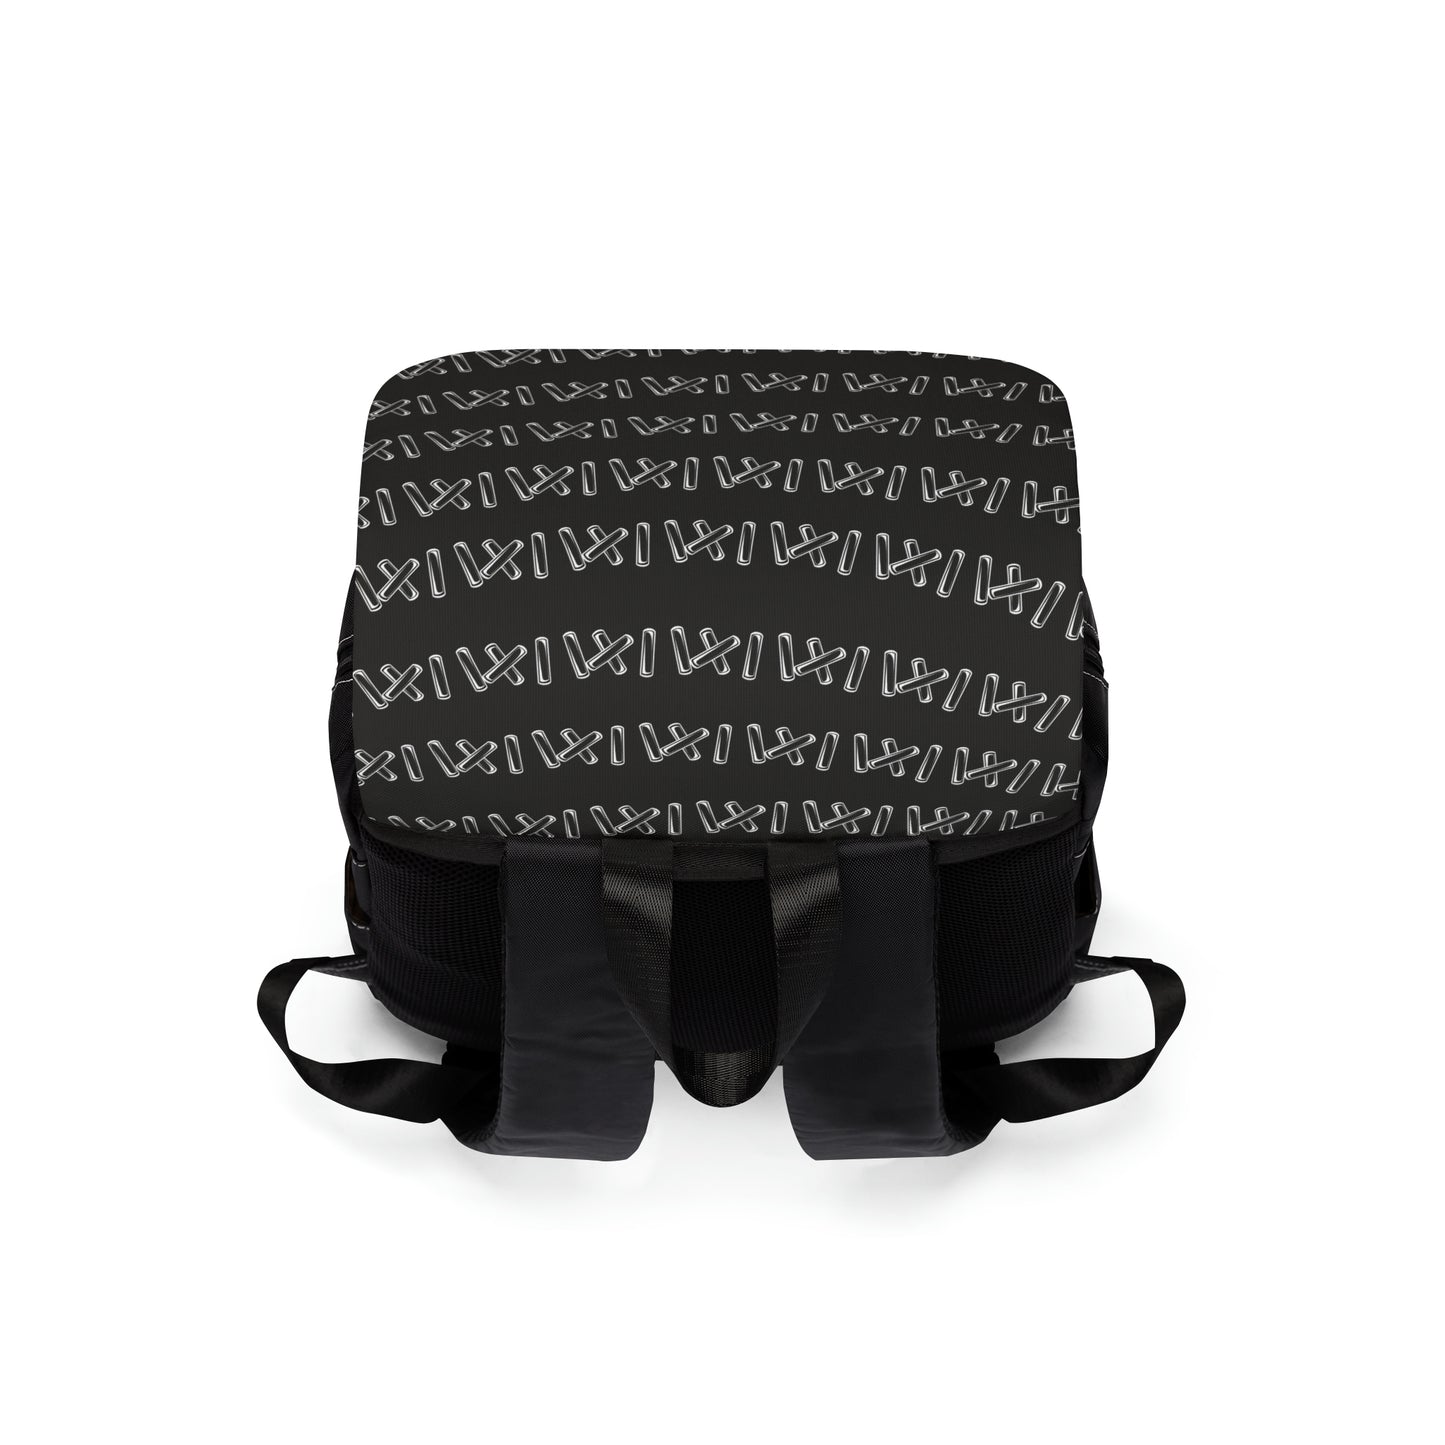 Unisex Casual Shoulder Backpack, Stitching Design